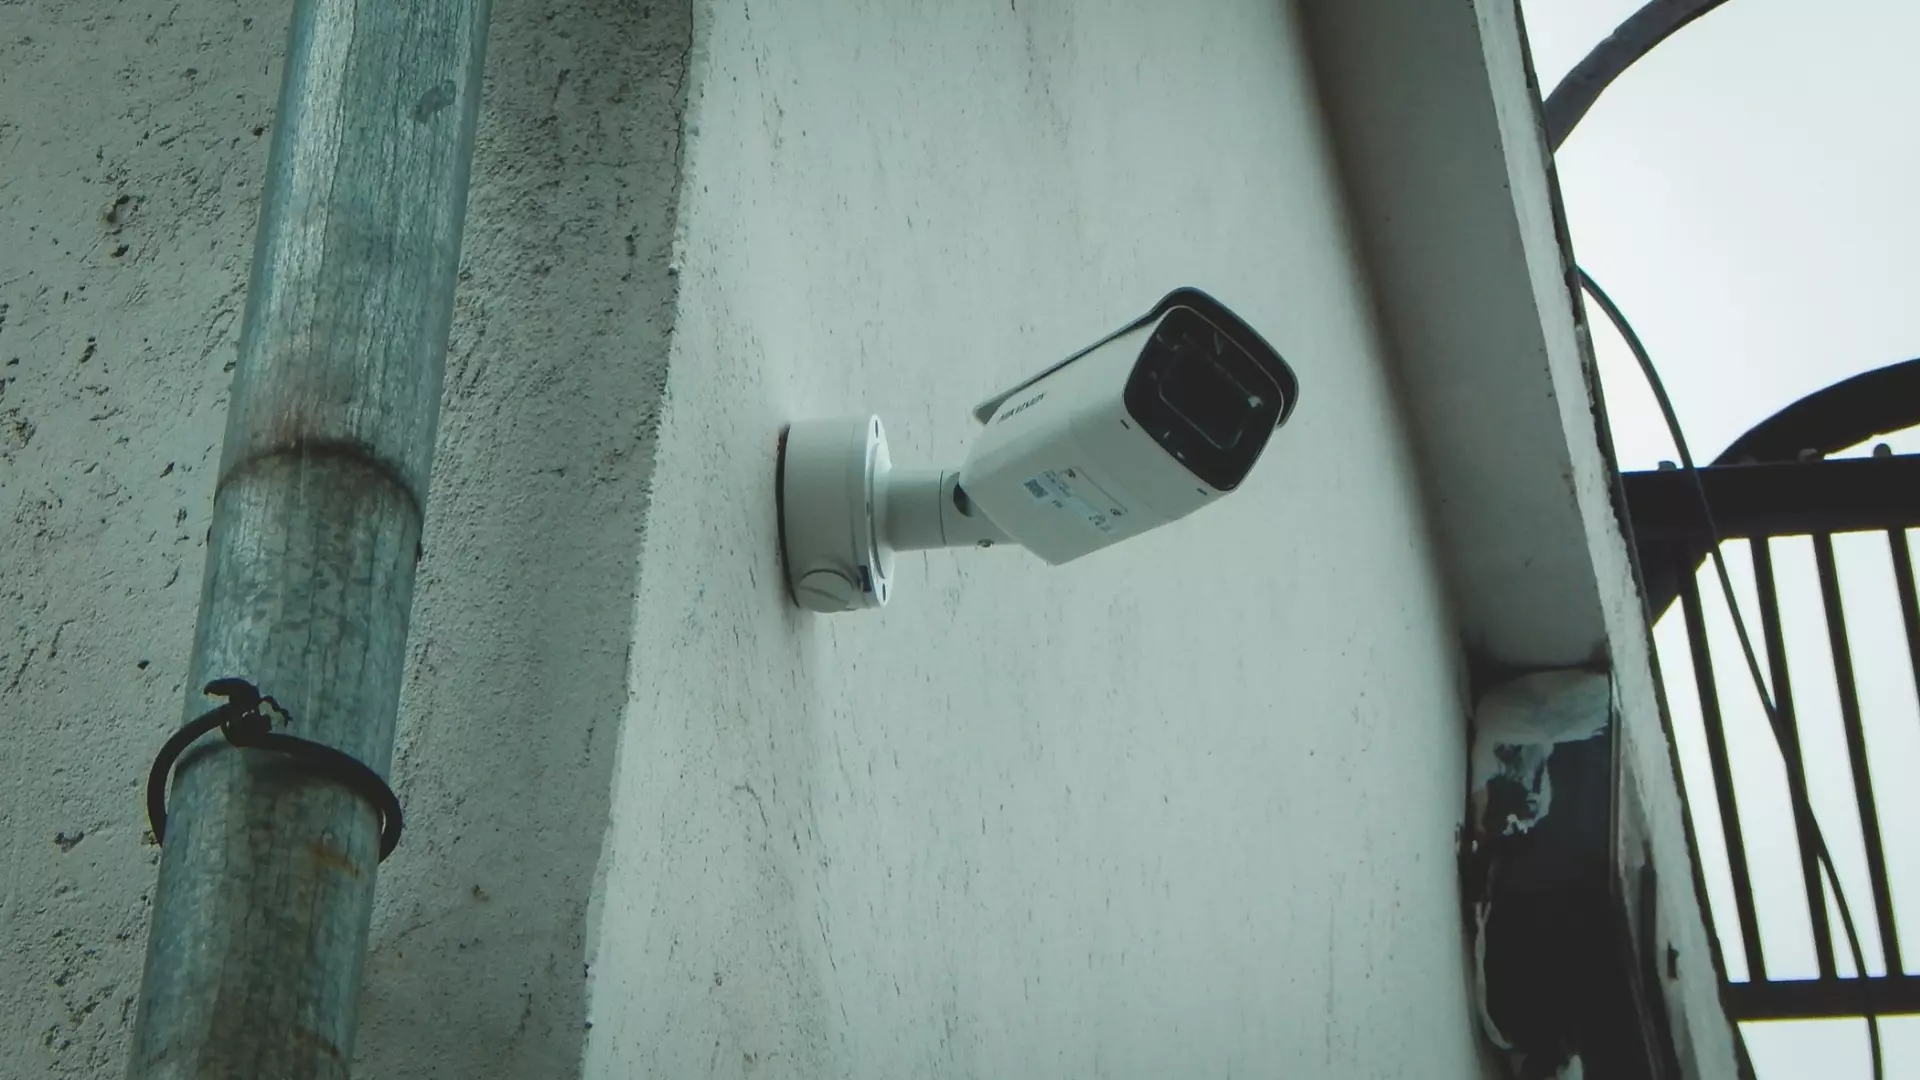 В Башкирии ищут поставщика камер наблюдения за 5,1 млн рублей